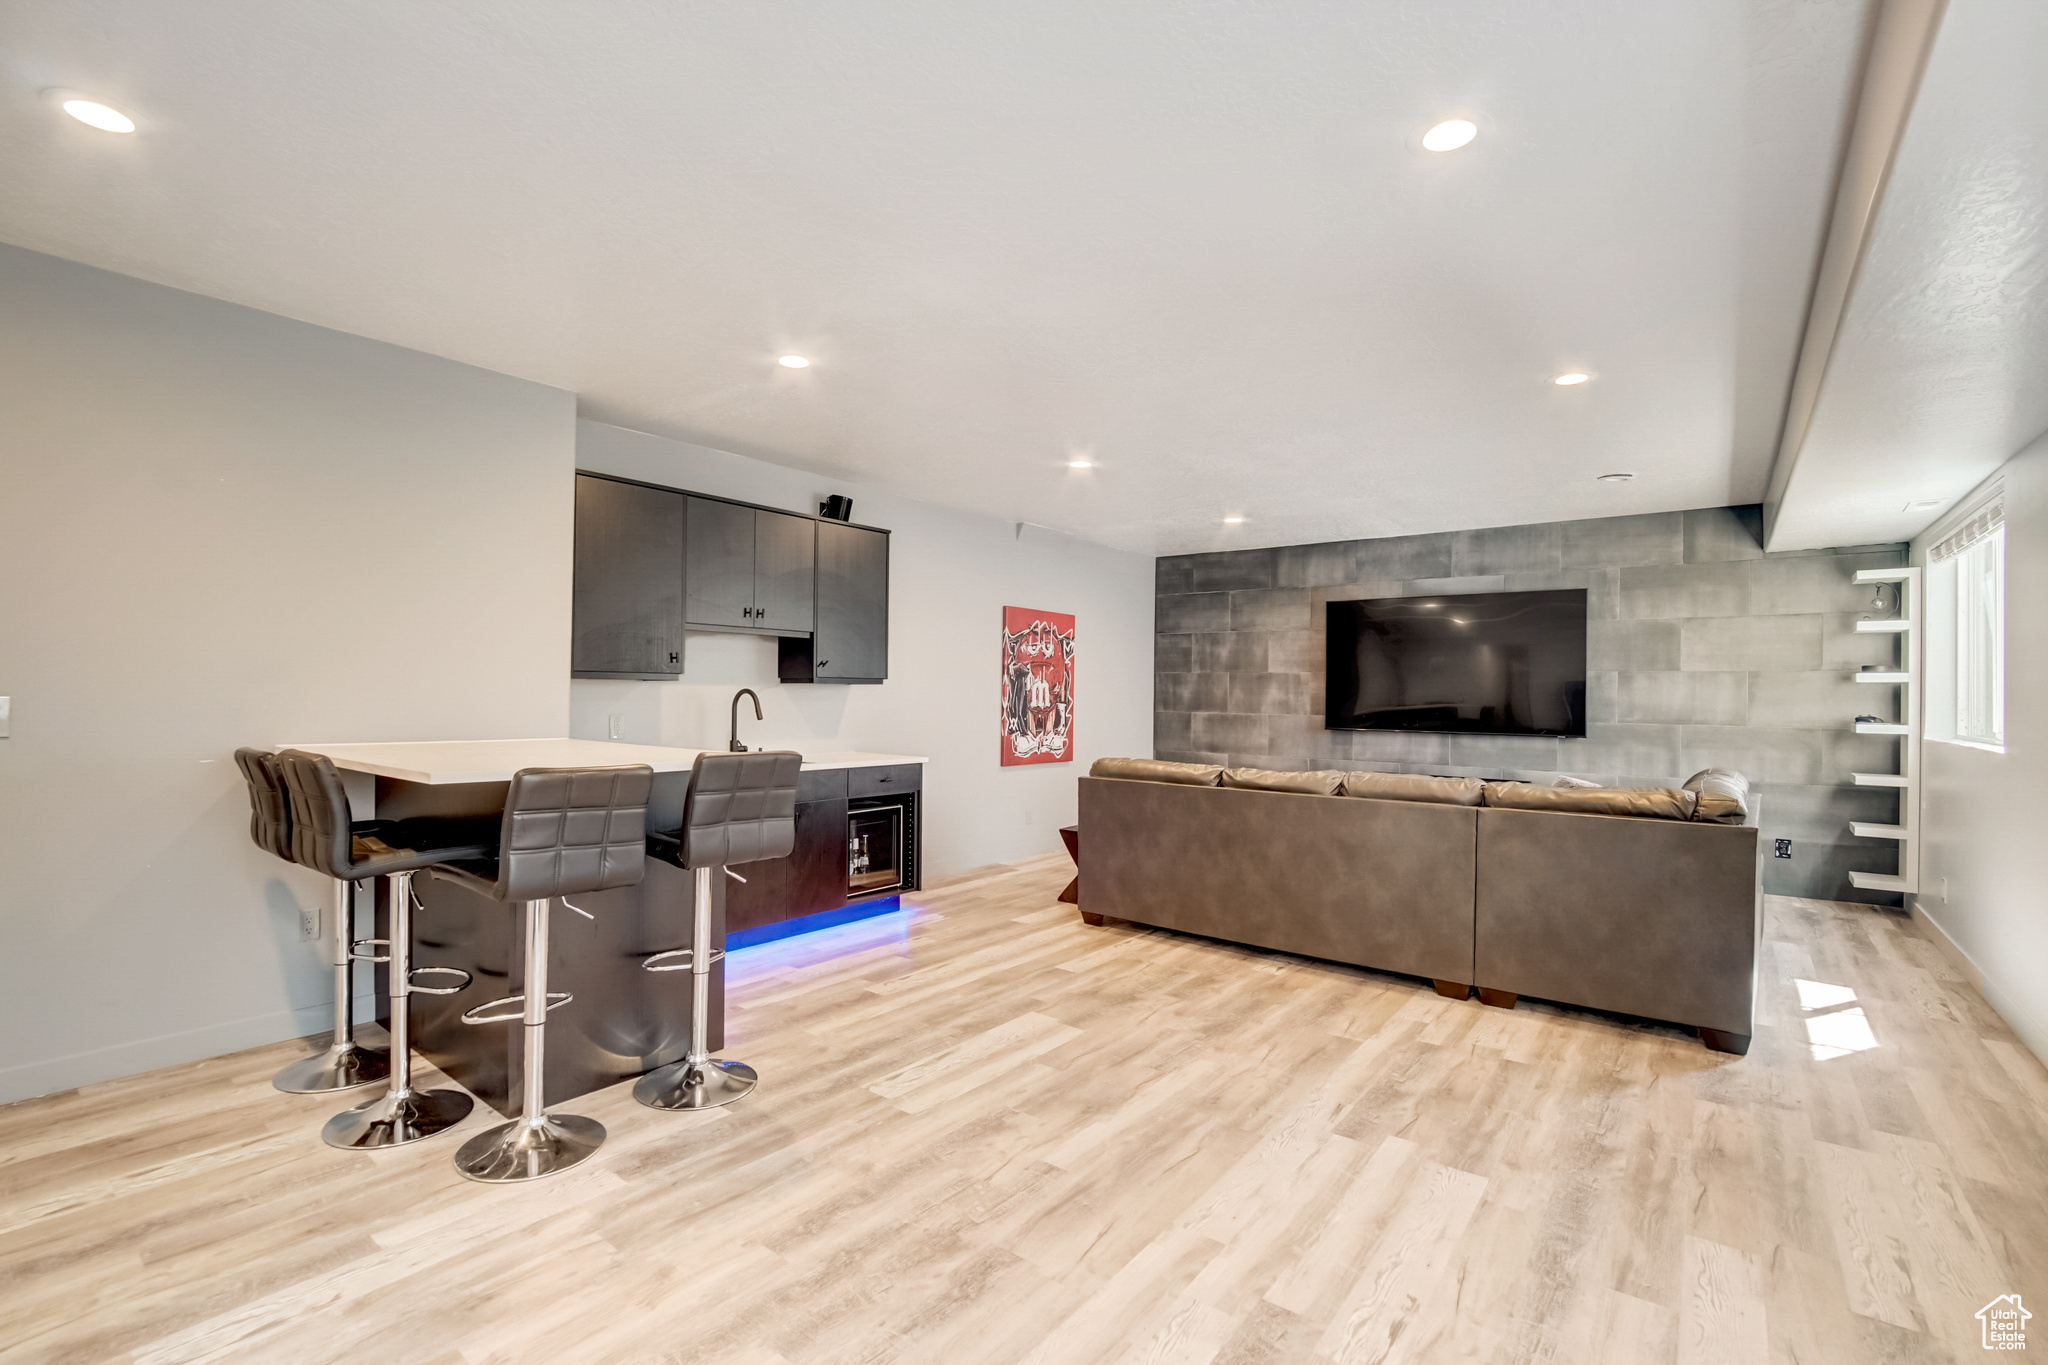 Living room featuring bar area and light hardwood / wood-style floors